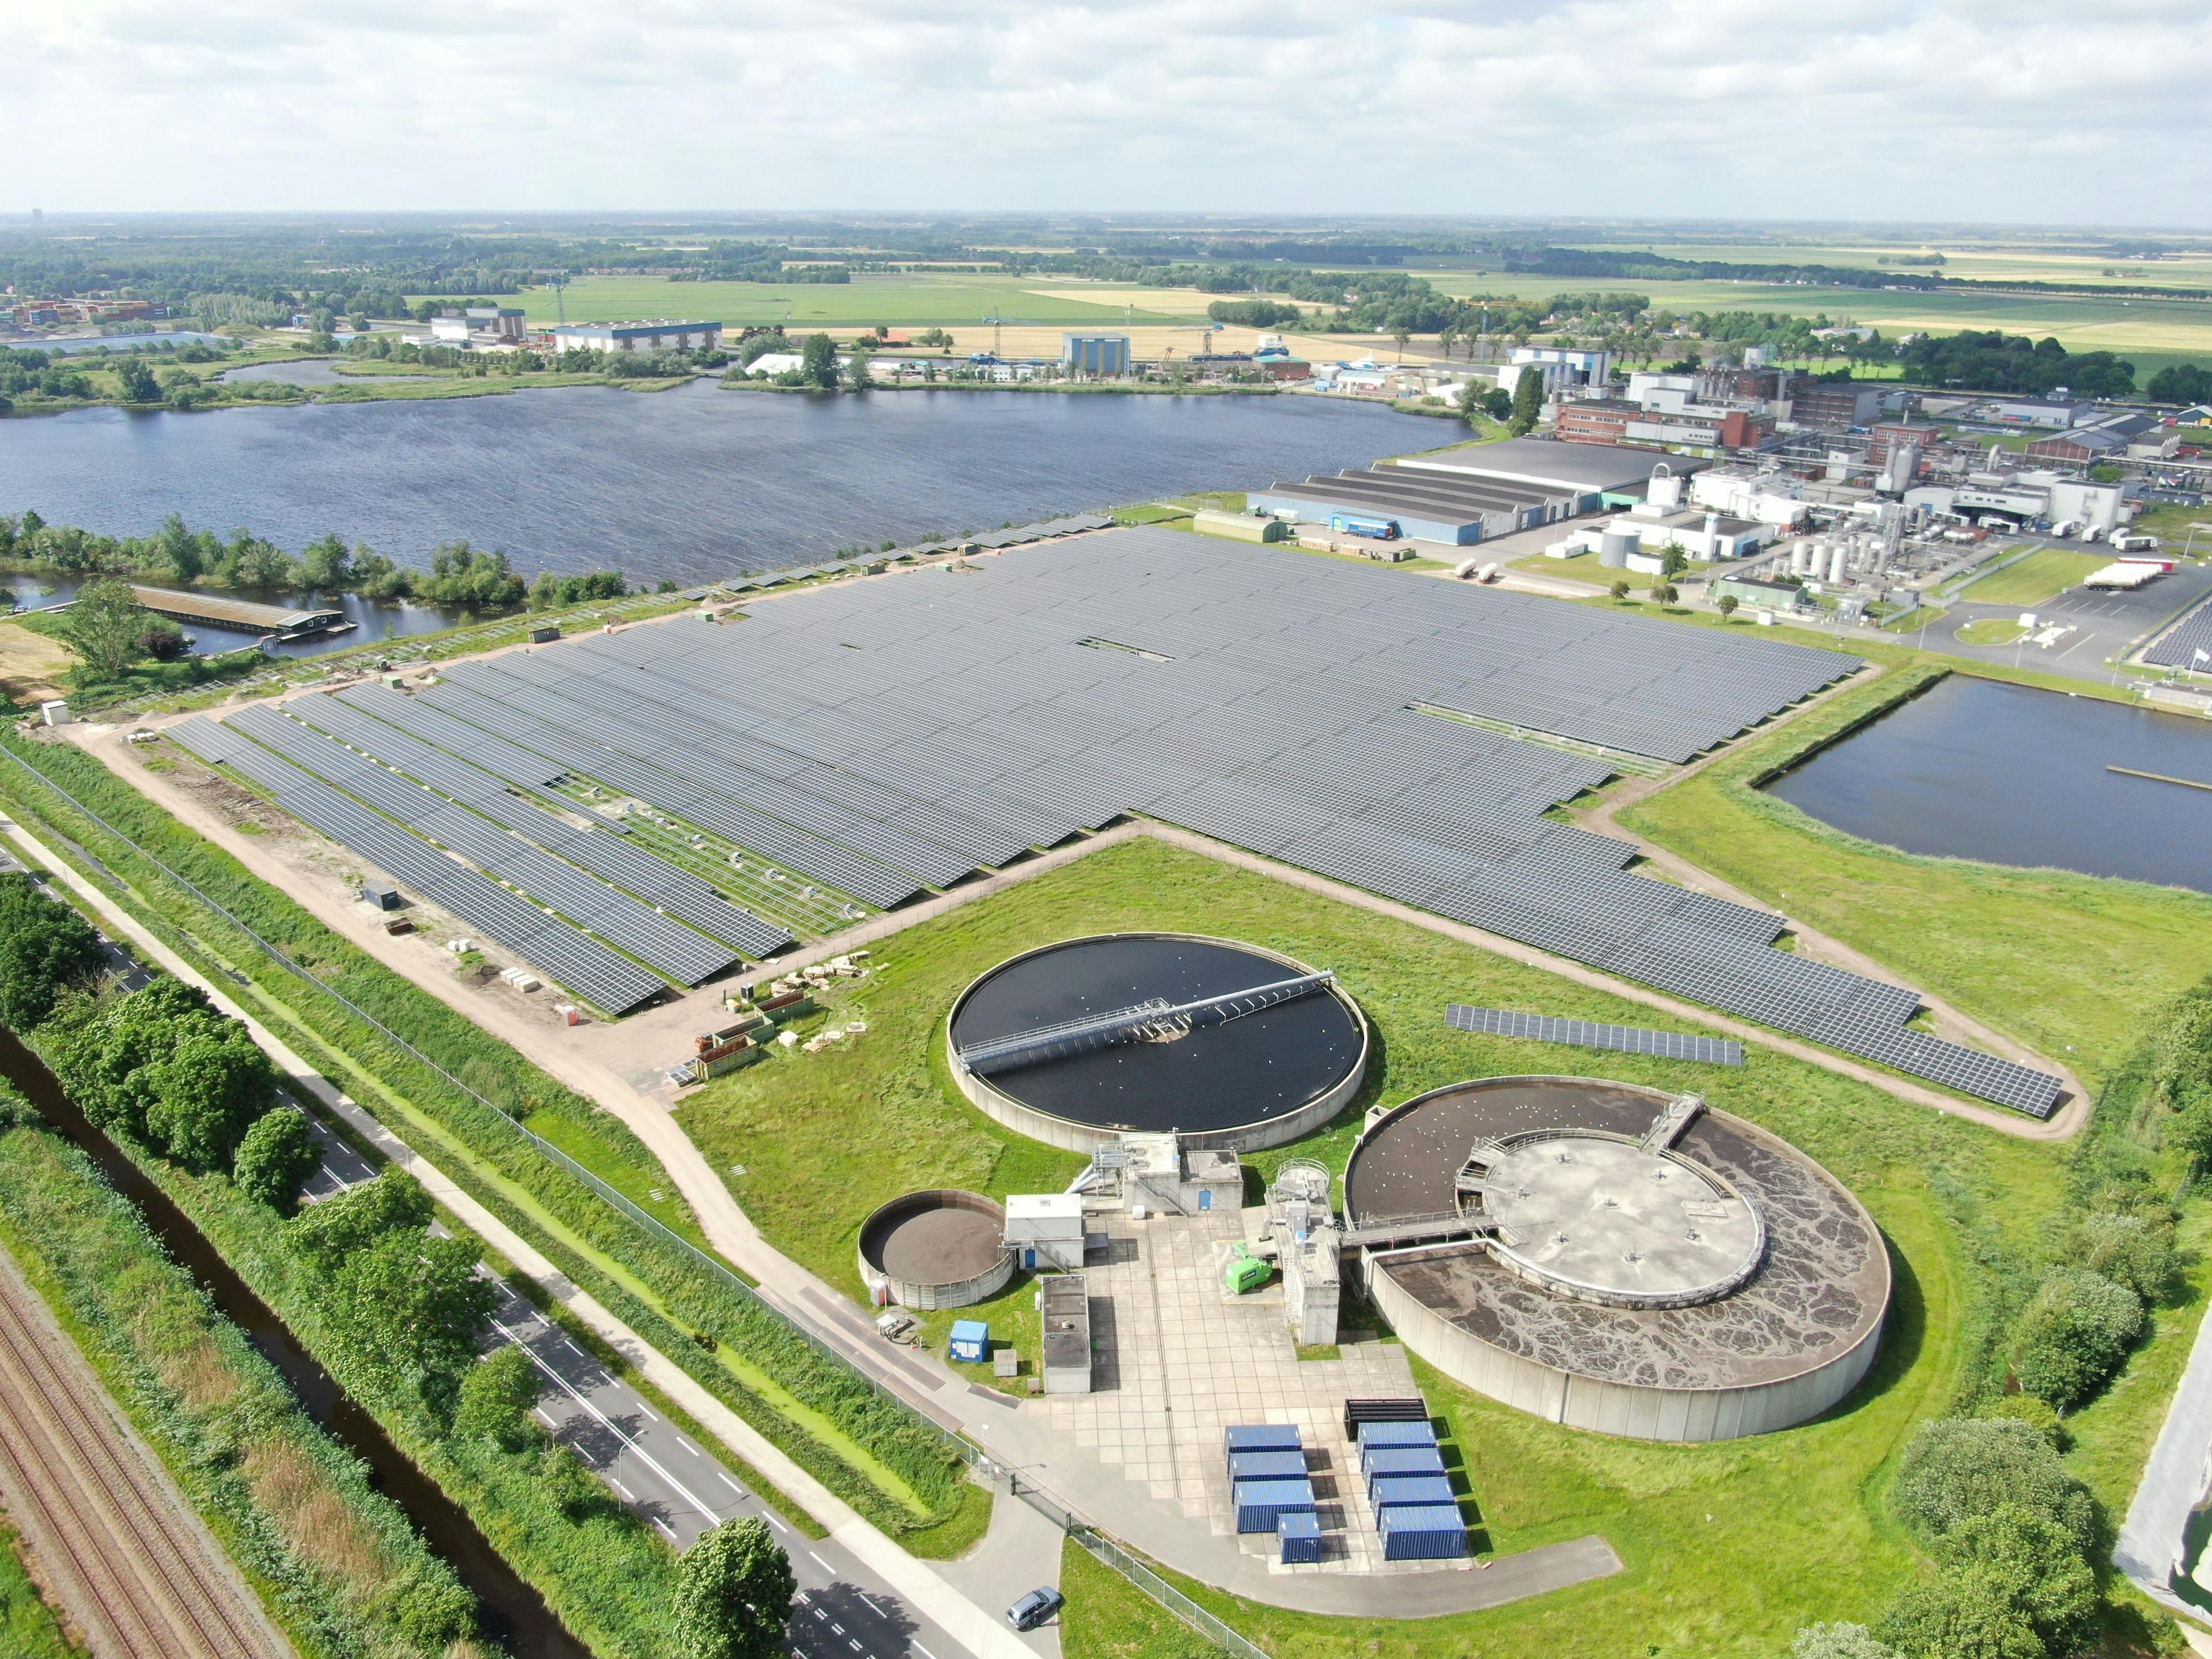 Foxhol freefield project in the Netherlands, taken by drone